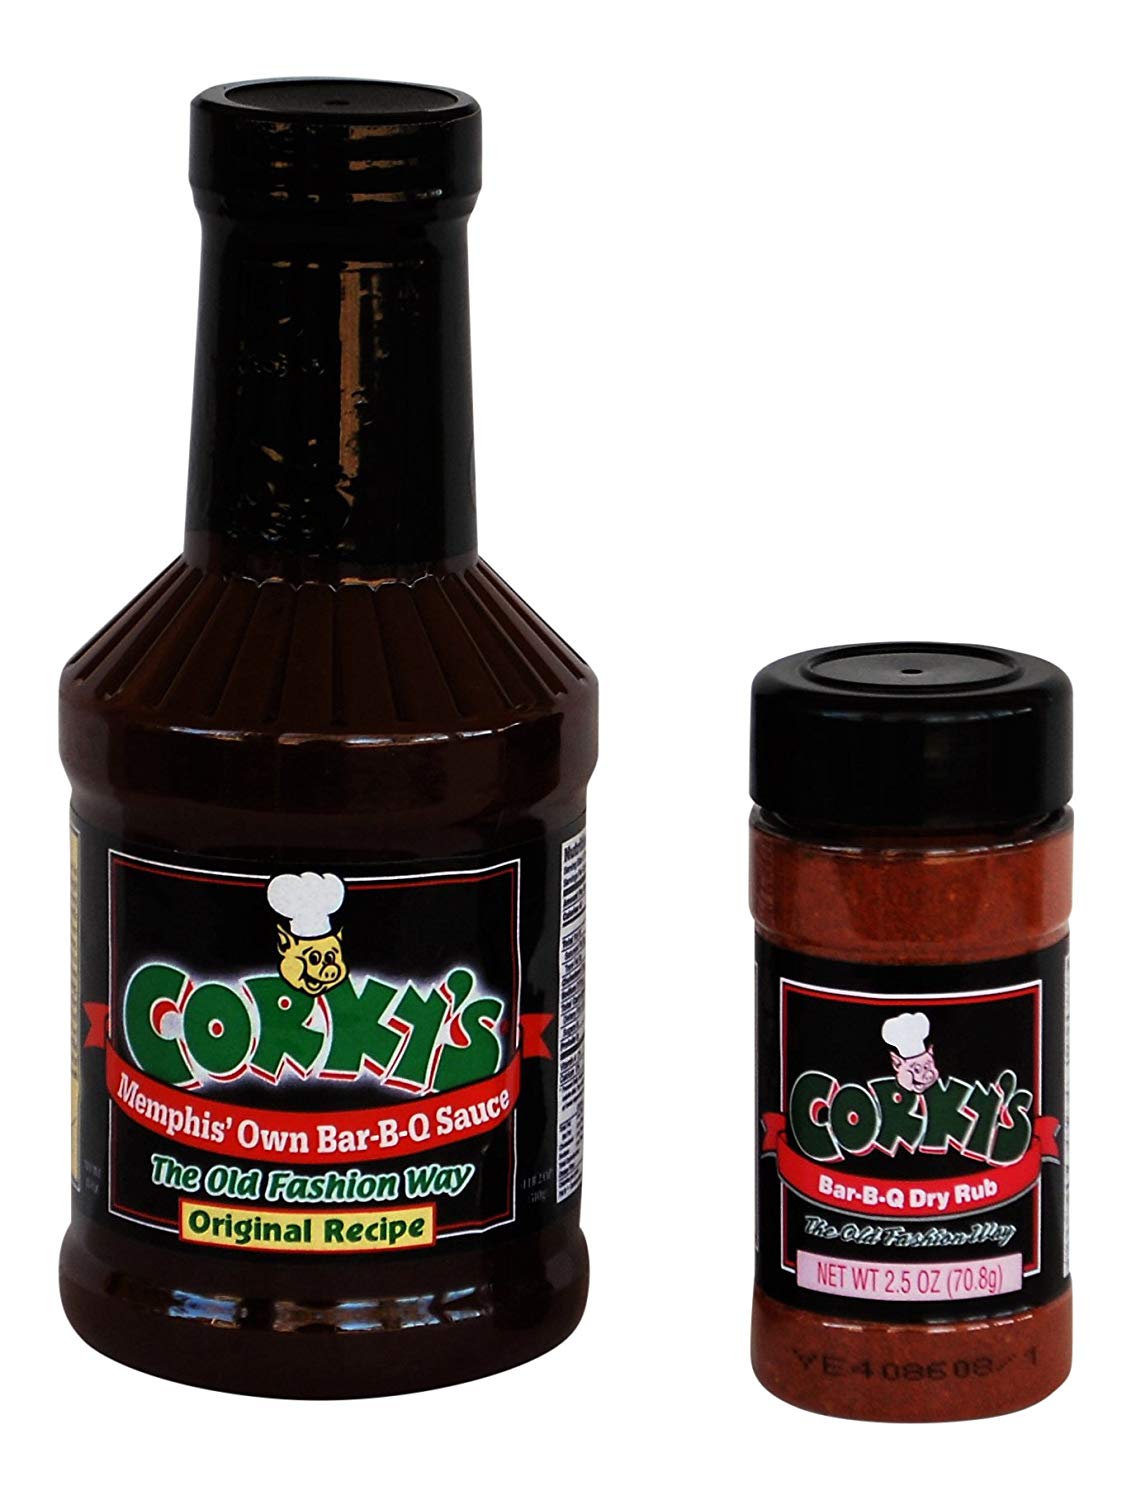 Corky's Barbecue Starter Bundle - 2 Items - 1 Bottle Original Recipe Bar-B-Q Sauce, 1 Jar of Bar-B-Q Dry Rub